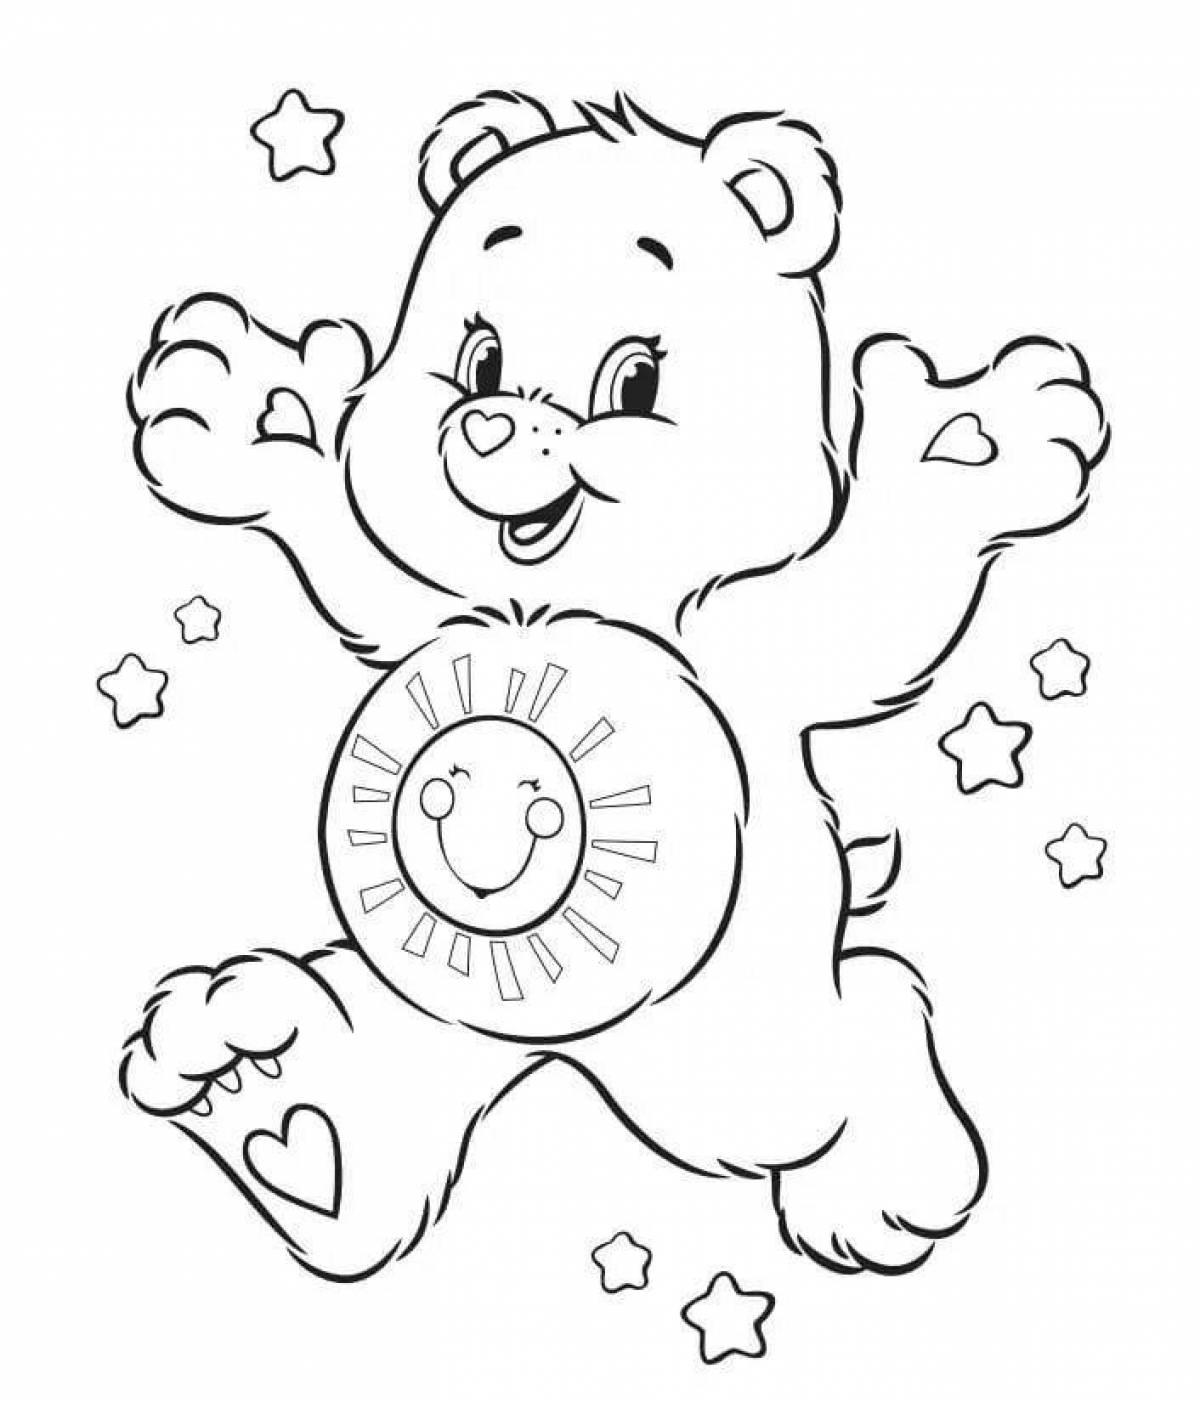 Joyful care bears coloring page